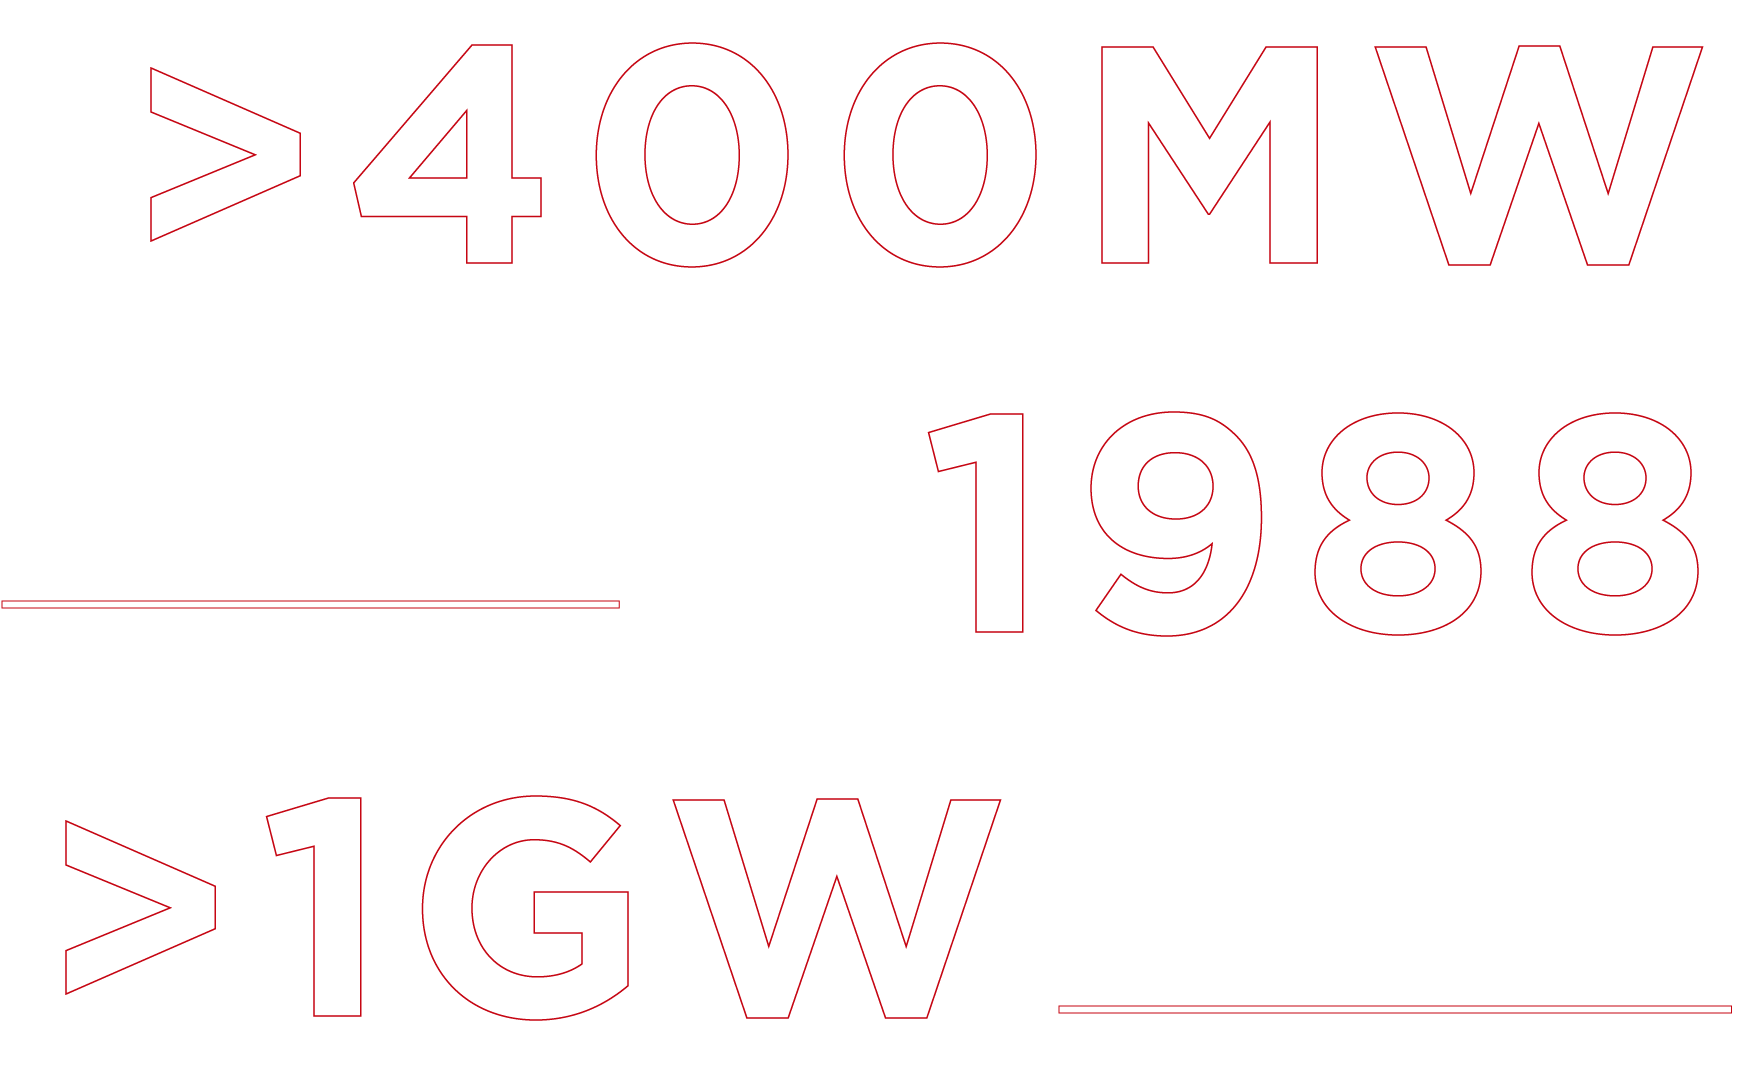 Energy 400MV